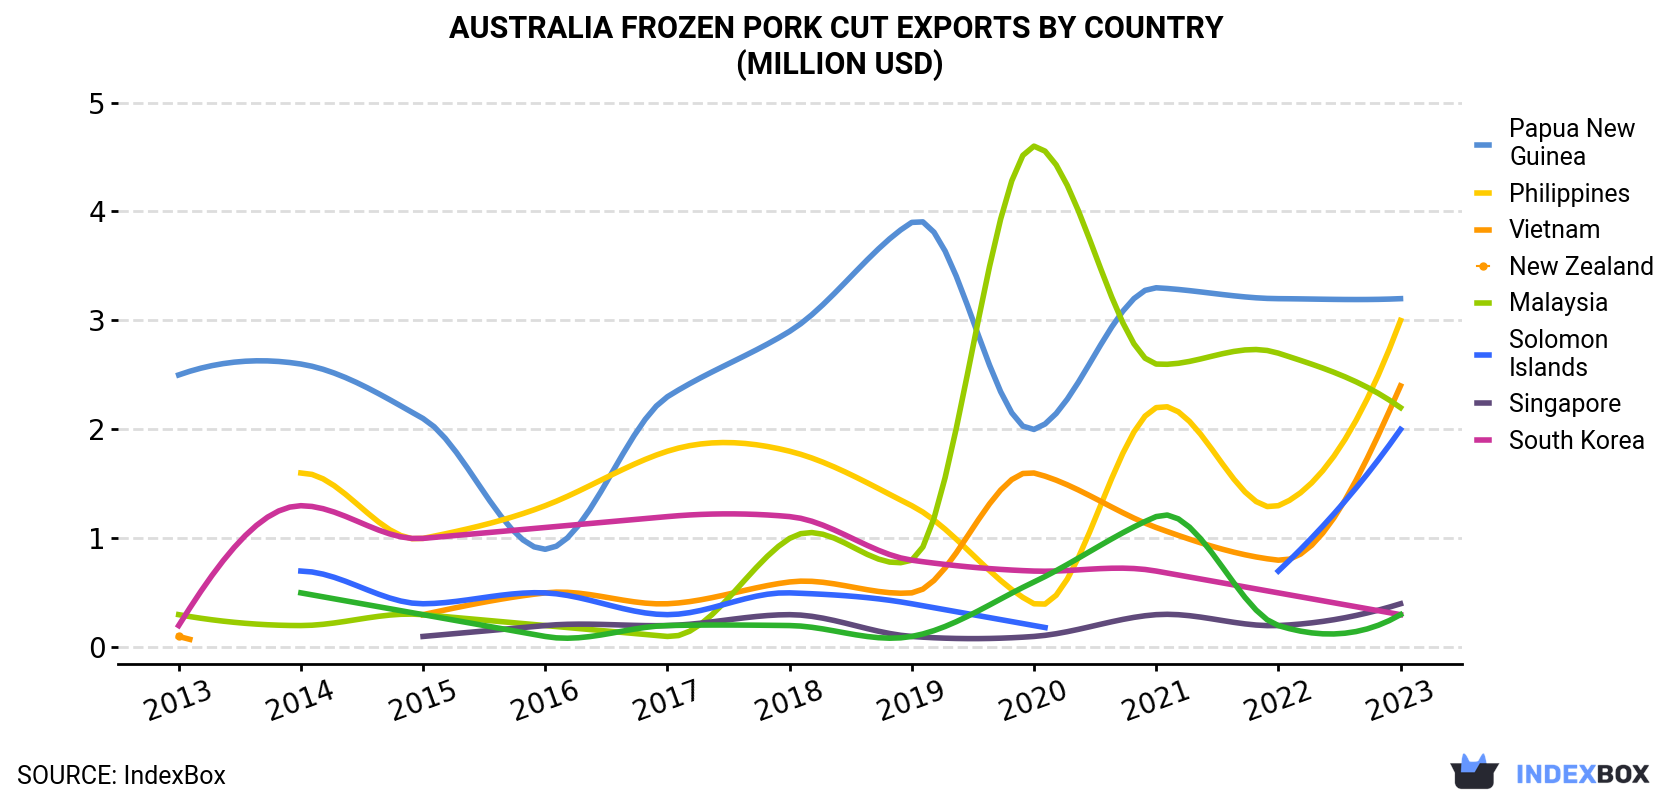 Australia Frozen Pork Cut Exports By Country (Million USD)